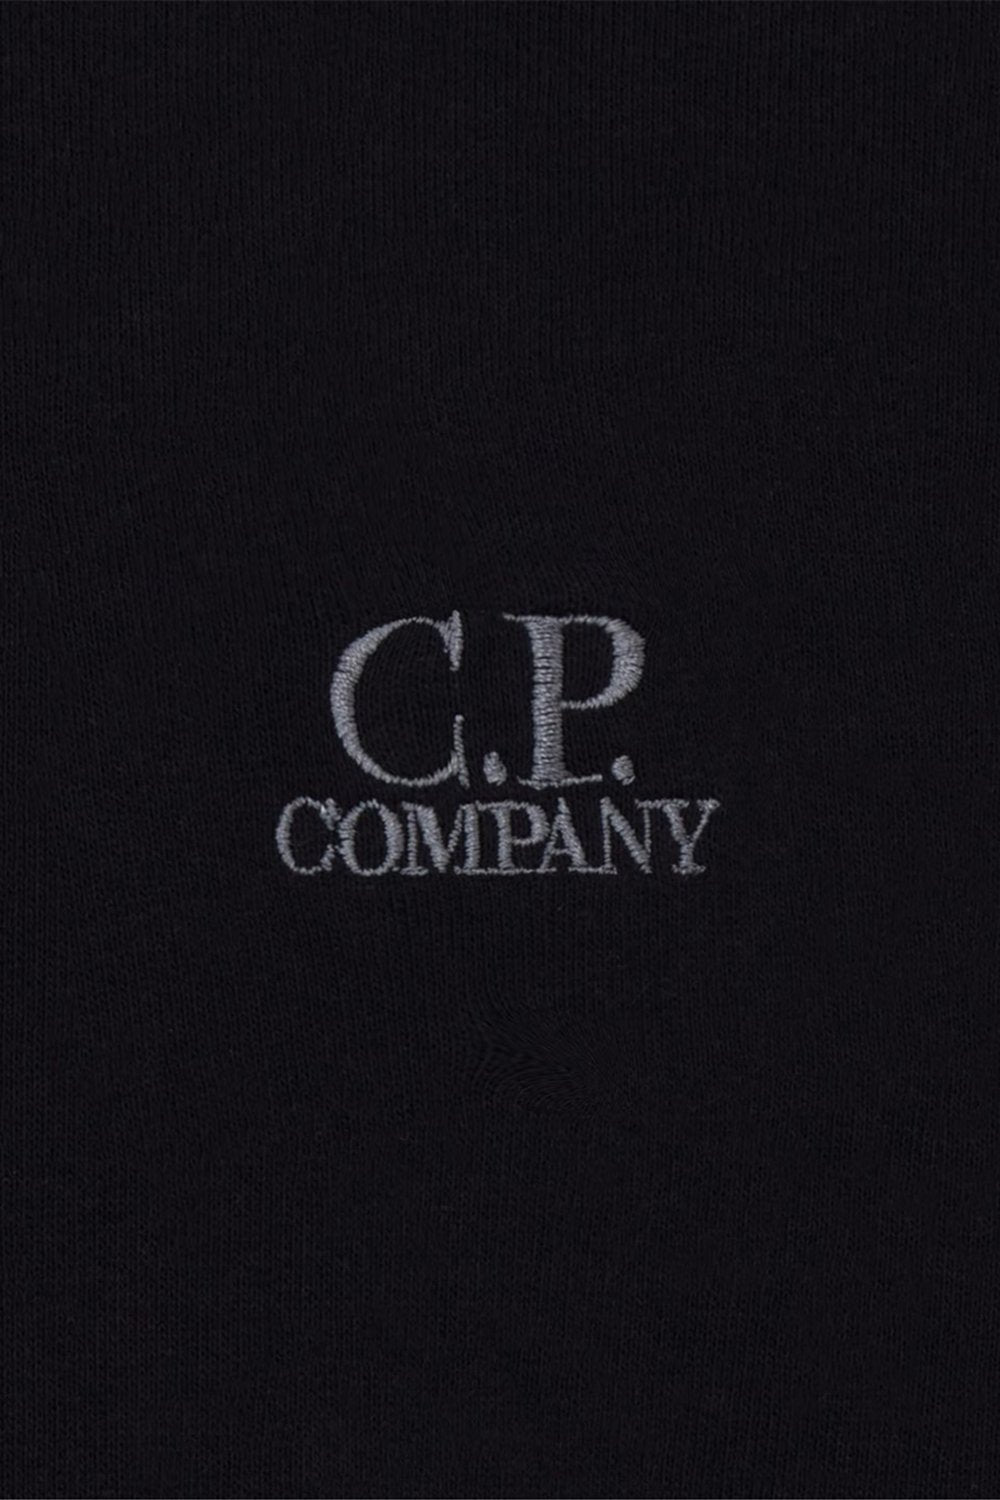 Men's Black C.P. Company Embroidered Chest Logo Sweatshirt